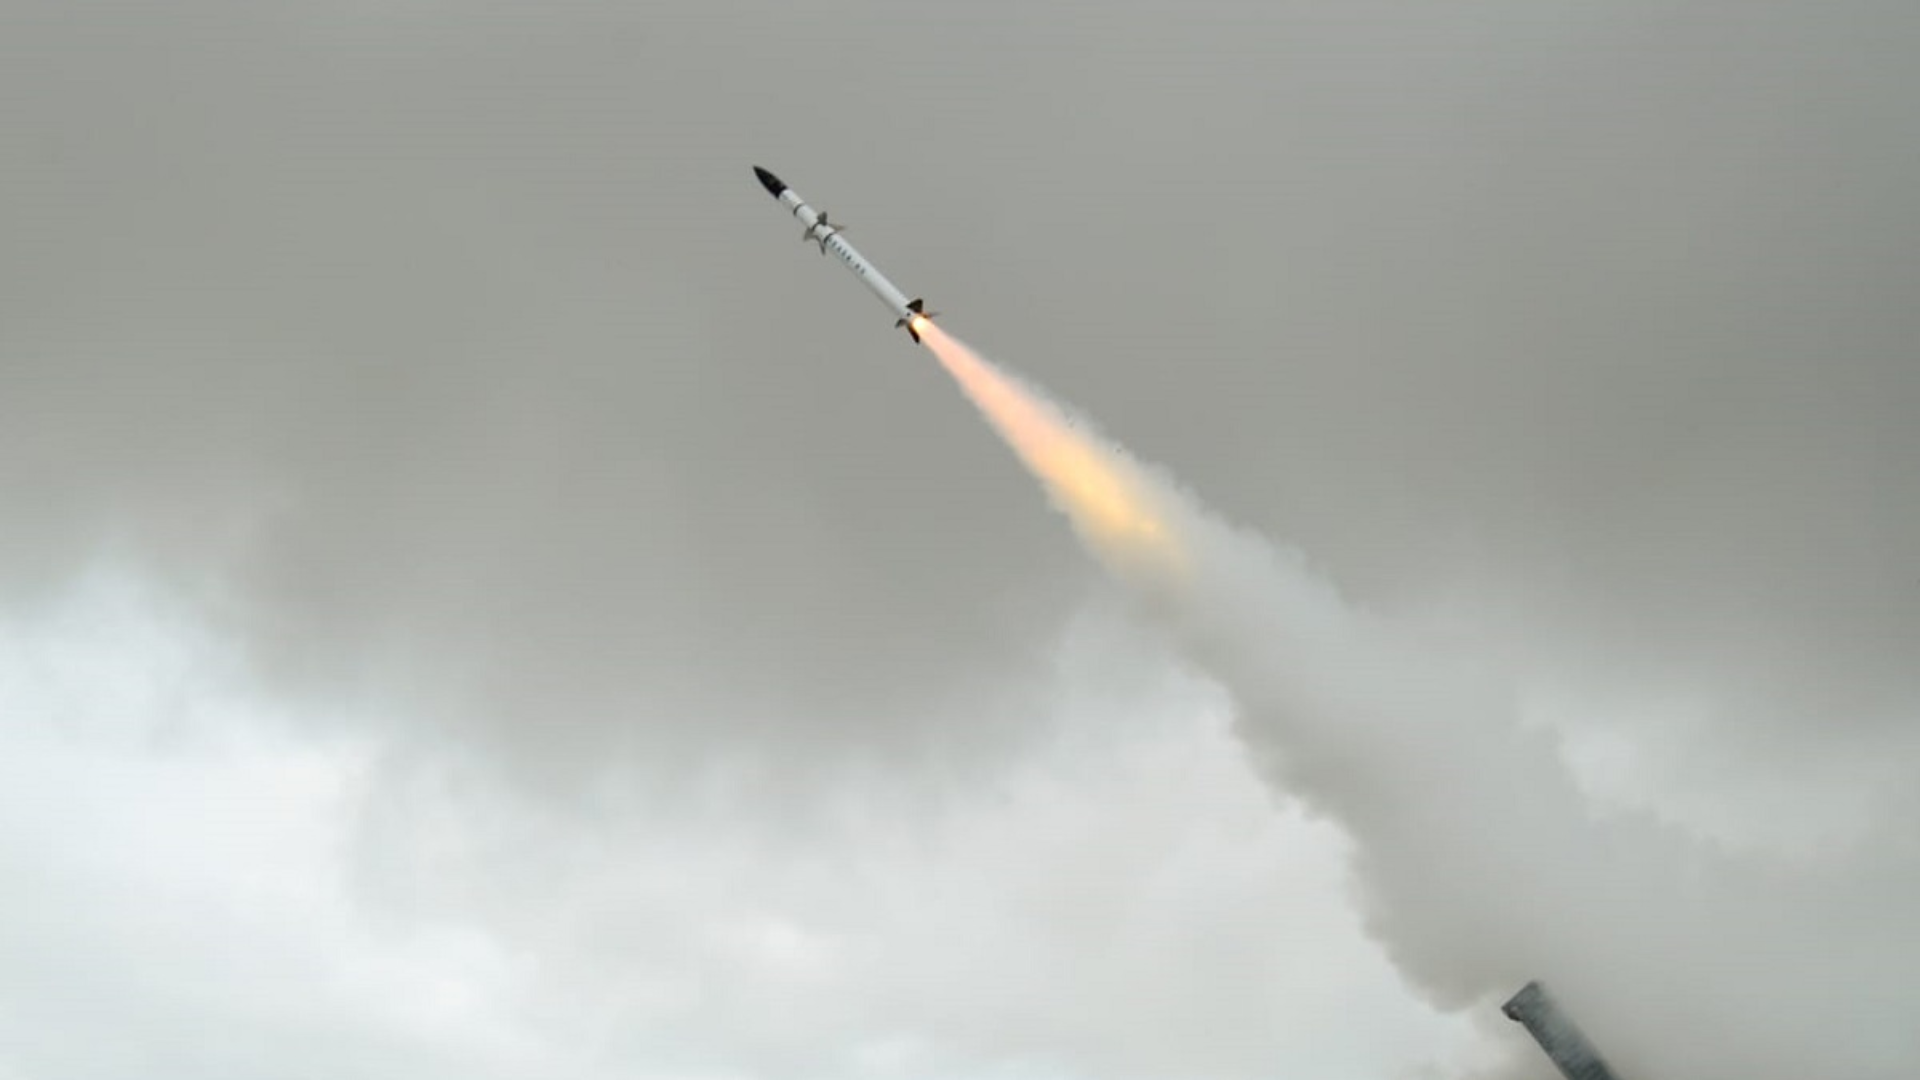 DRDO's Indigenous Technology Cruise Missile Test hits milestone